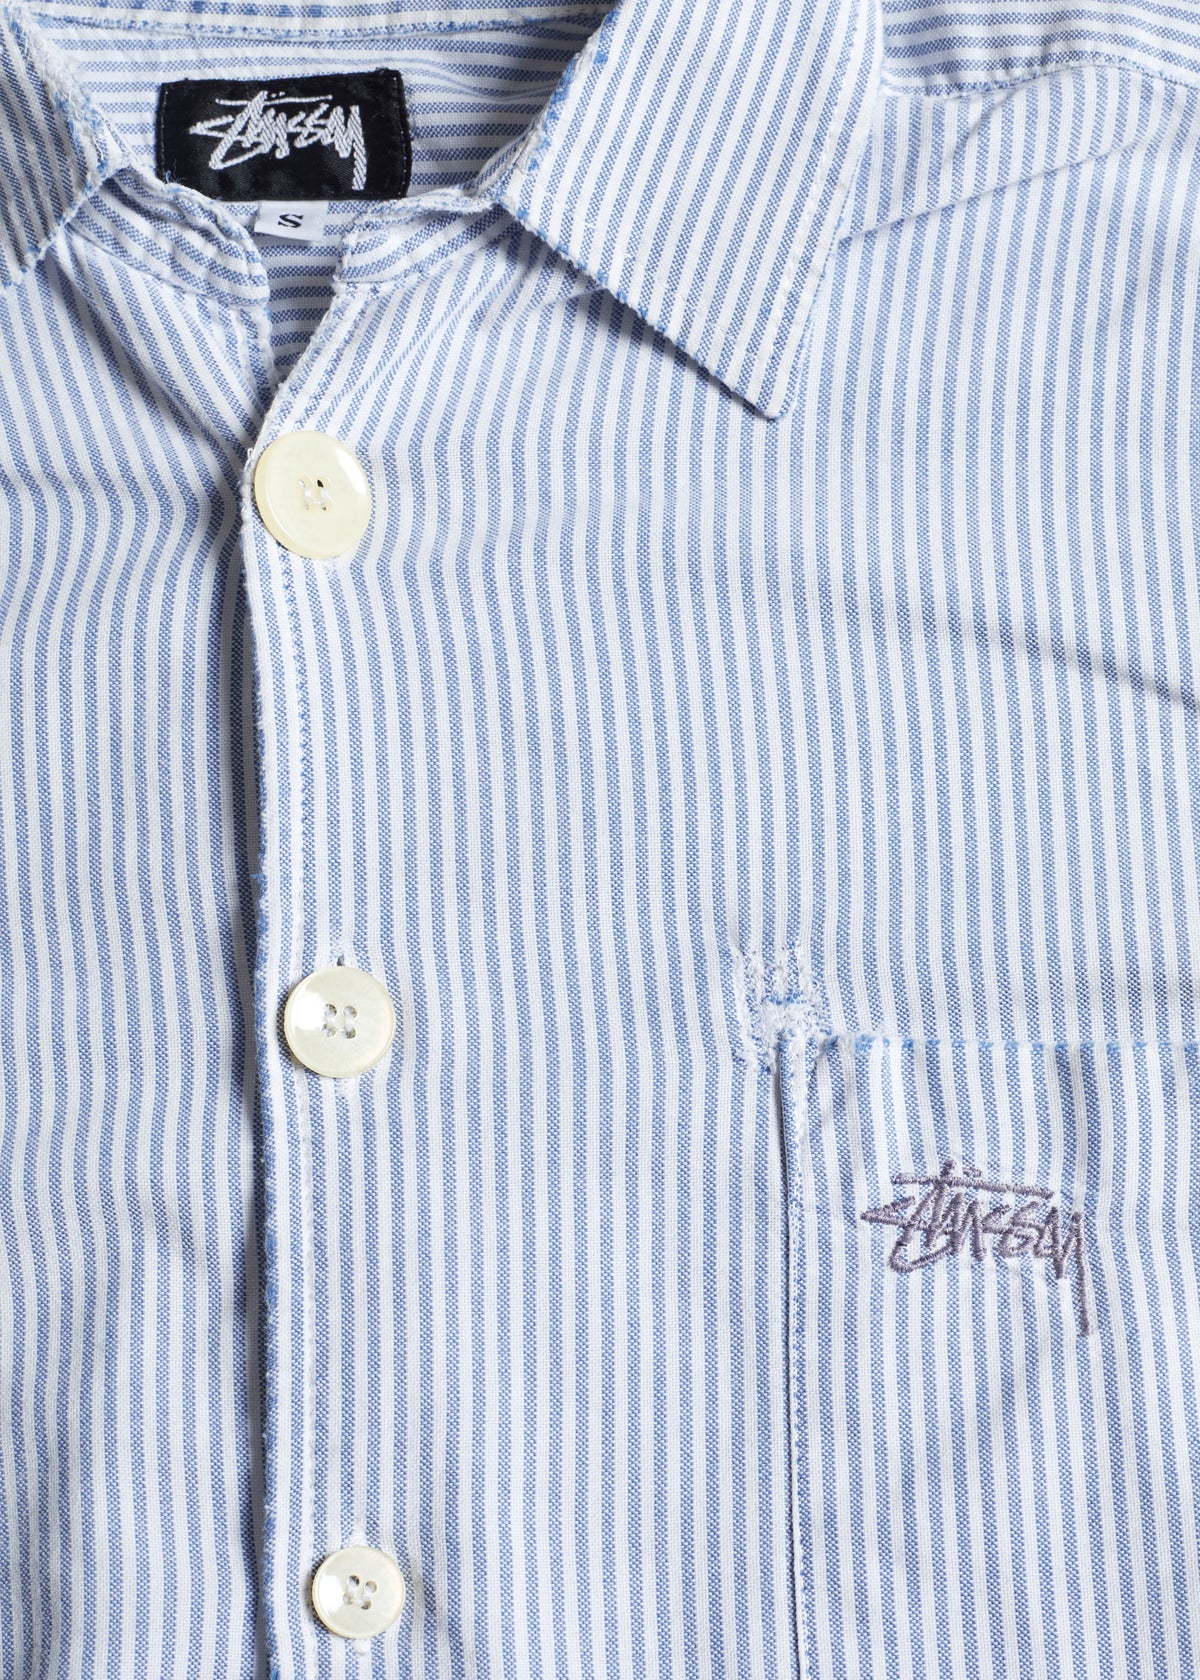 Graduated Button Shirt 1988 - Medium - The Archivist Store